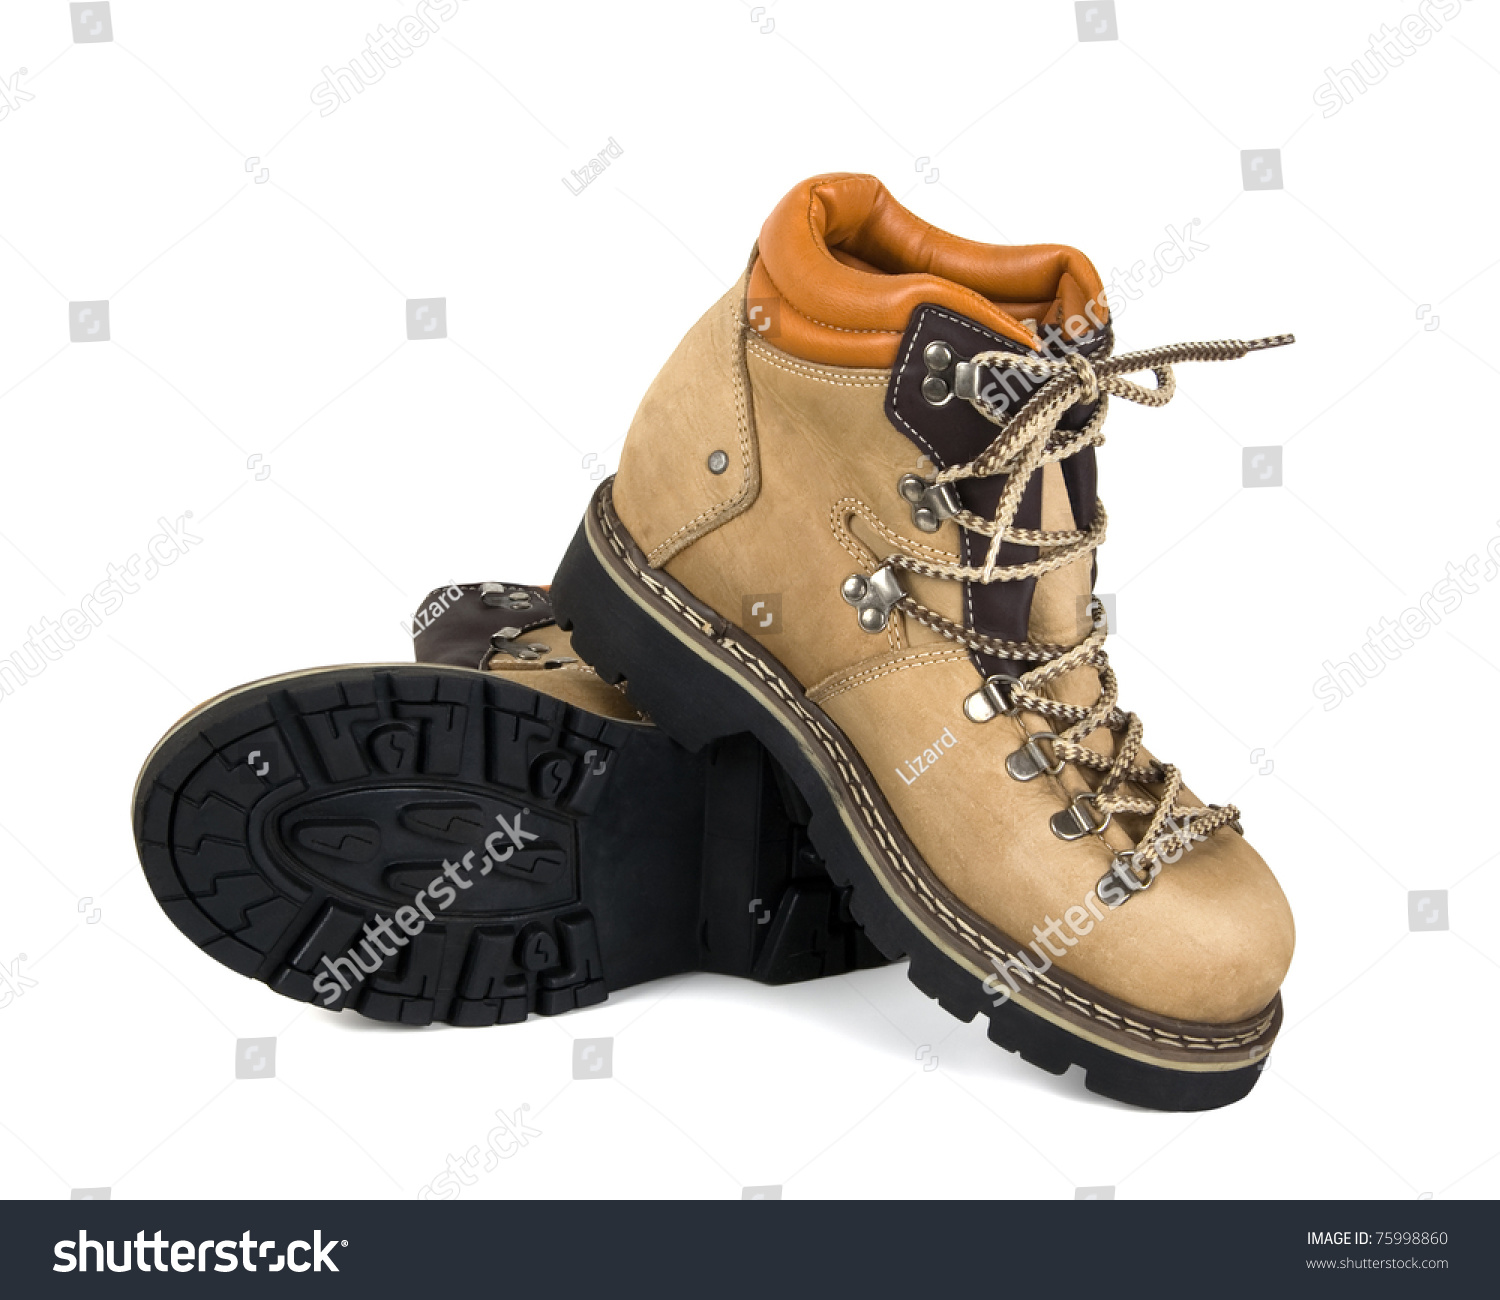 Hiking Boots Isolated On White Background Stock Photo 75998860 ...